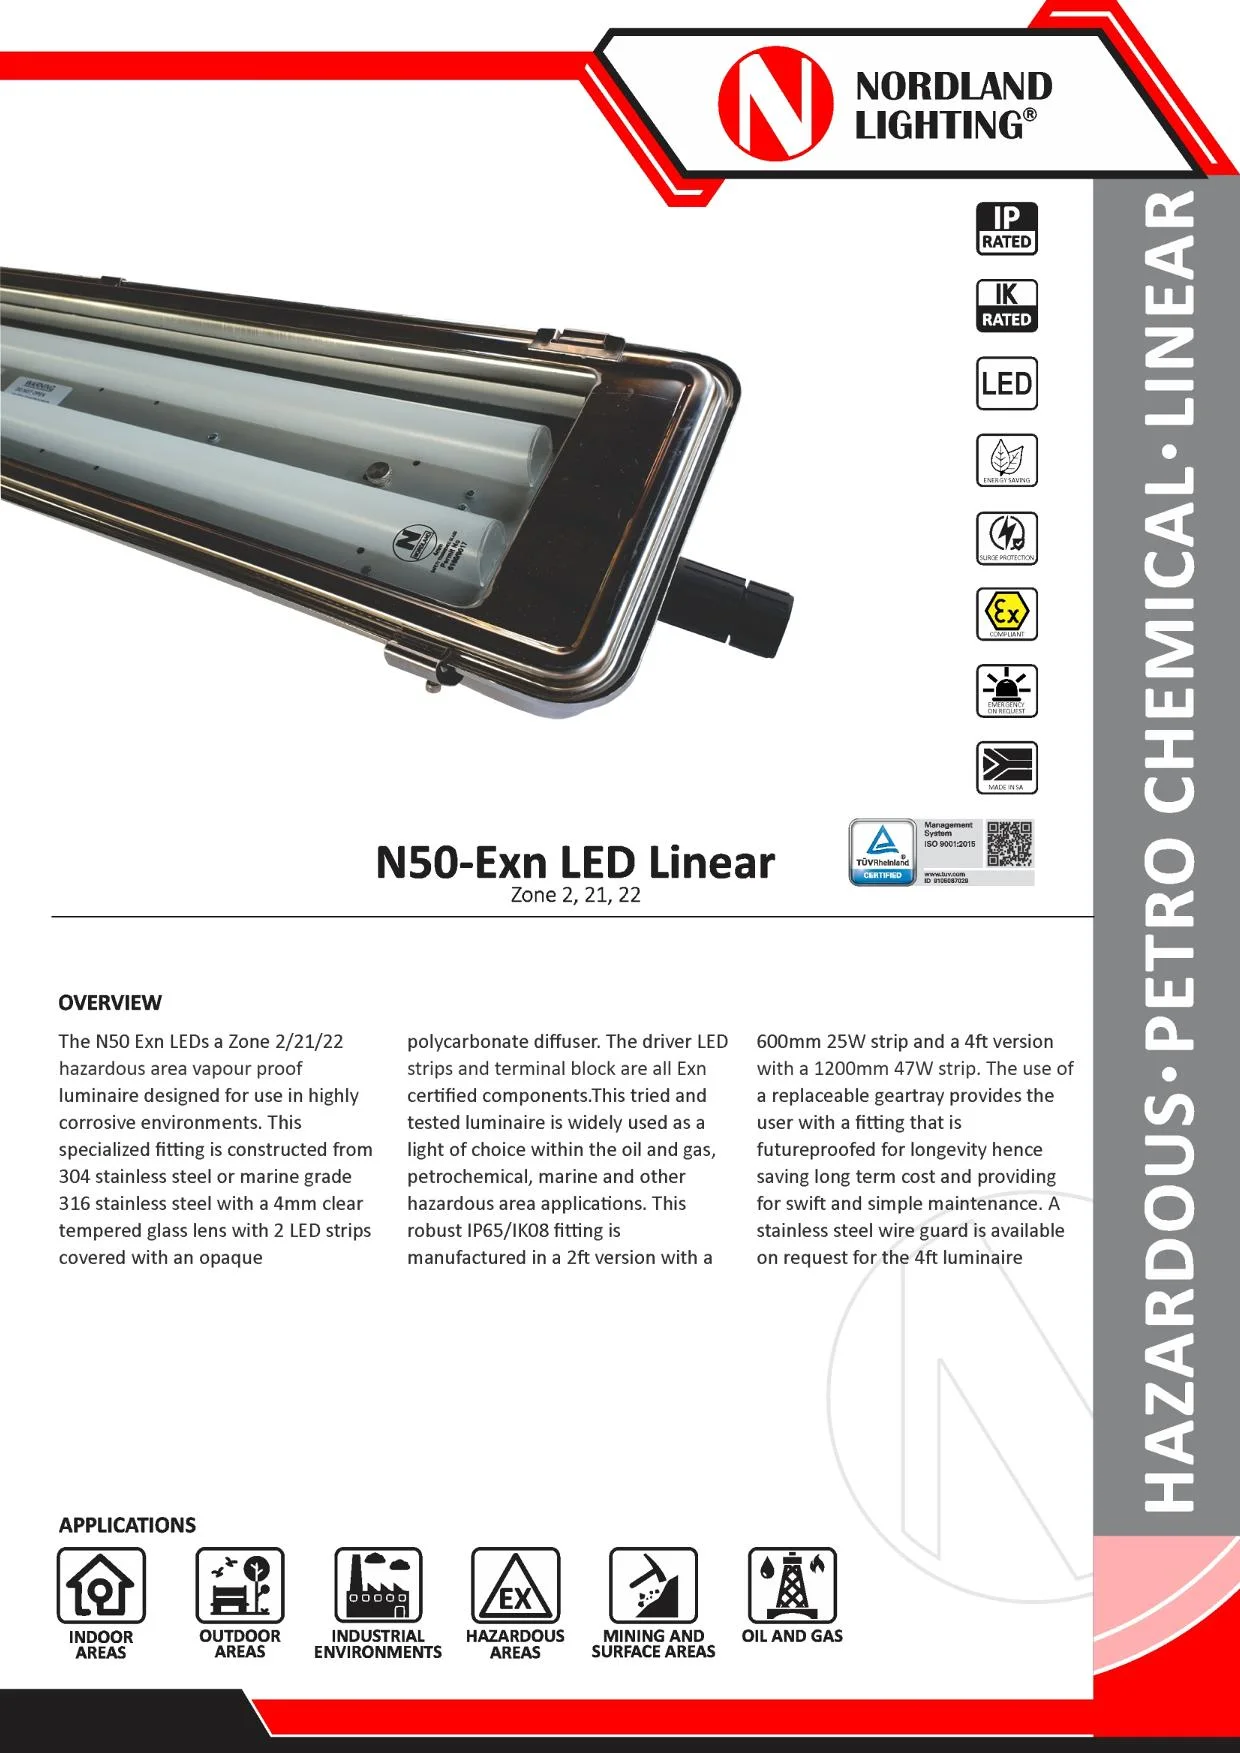 NL47 Nordland N50-Exn LED Hazardouns and Vapour Proof Luminaire